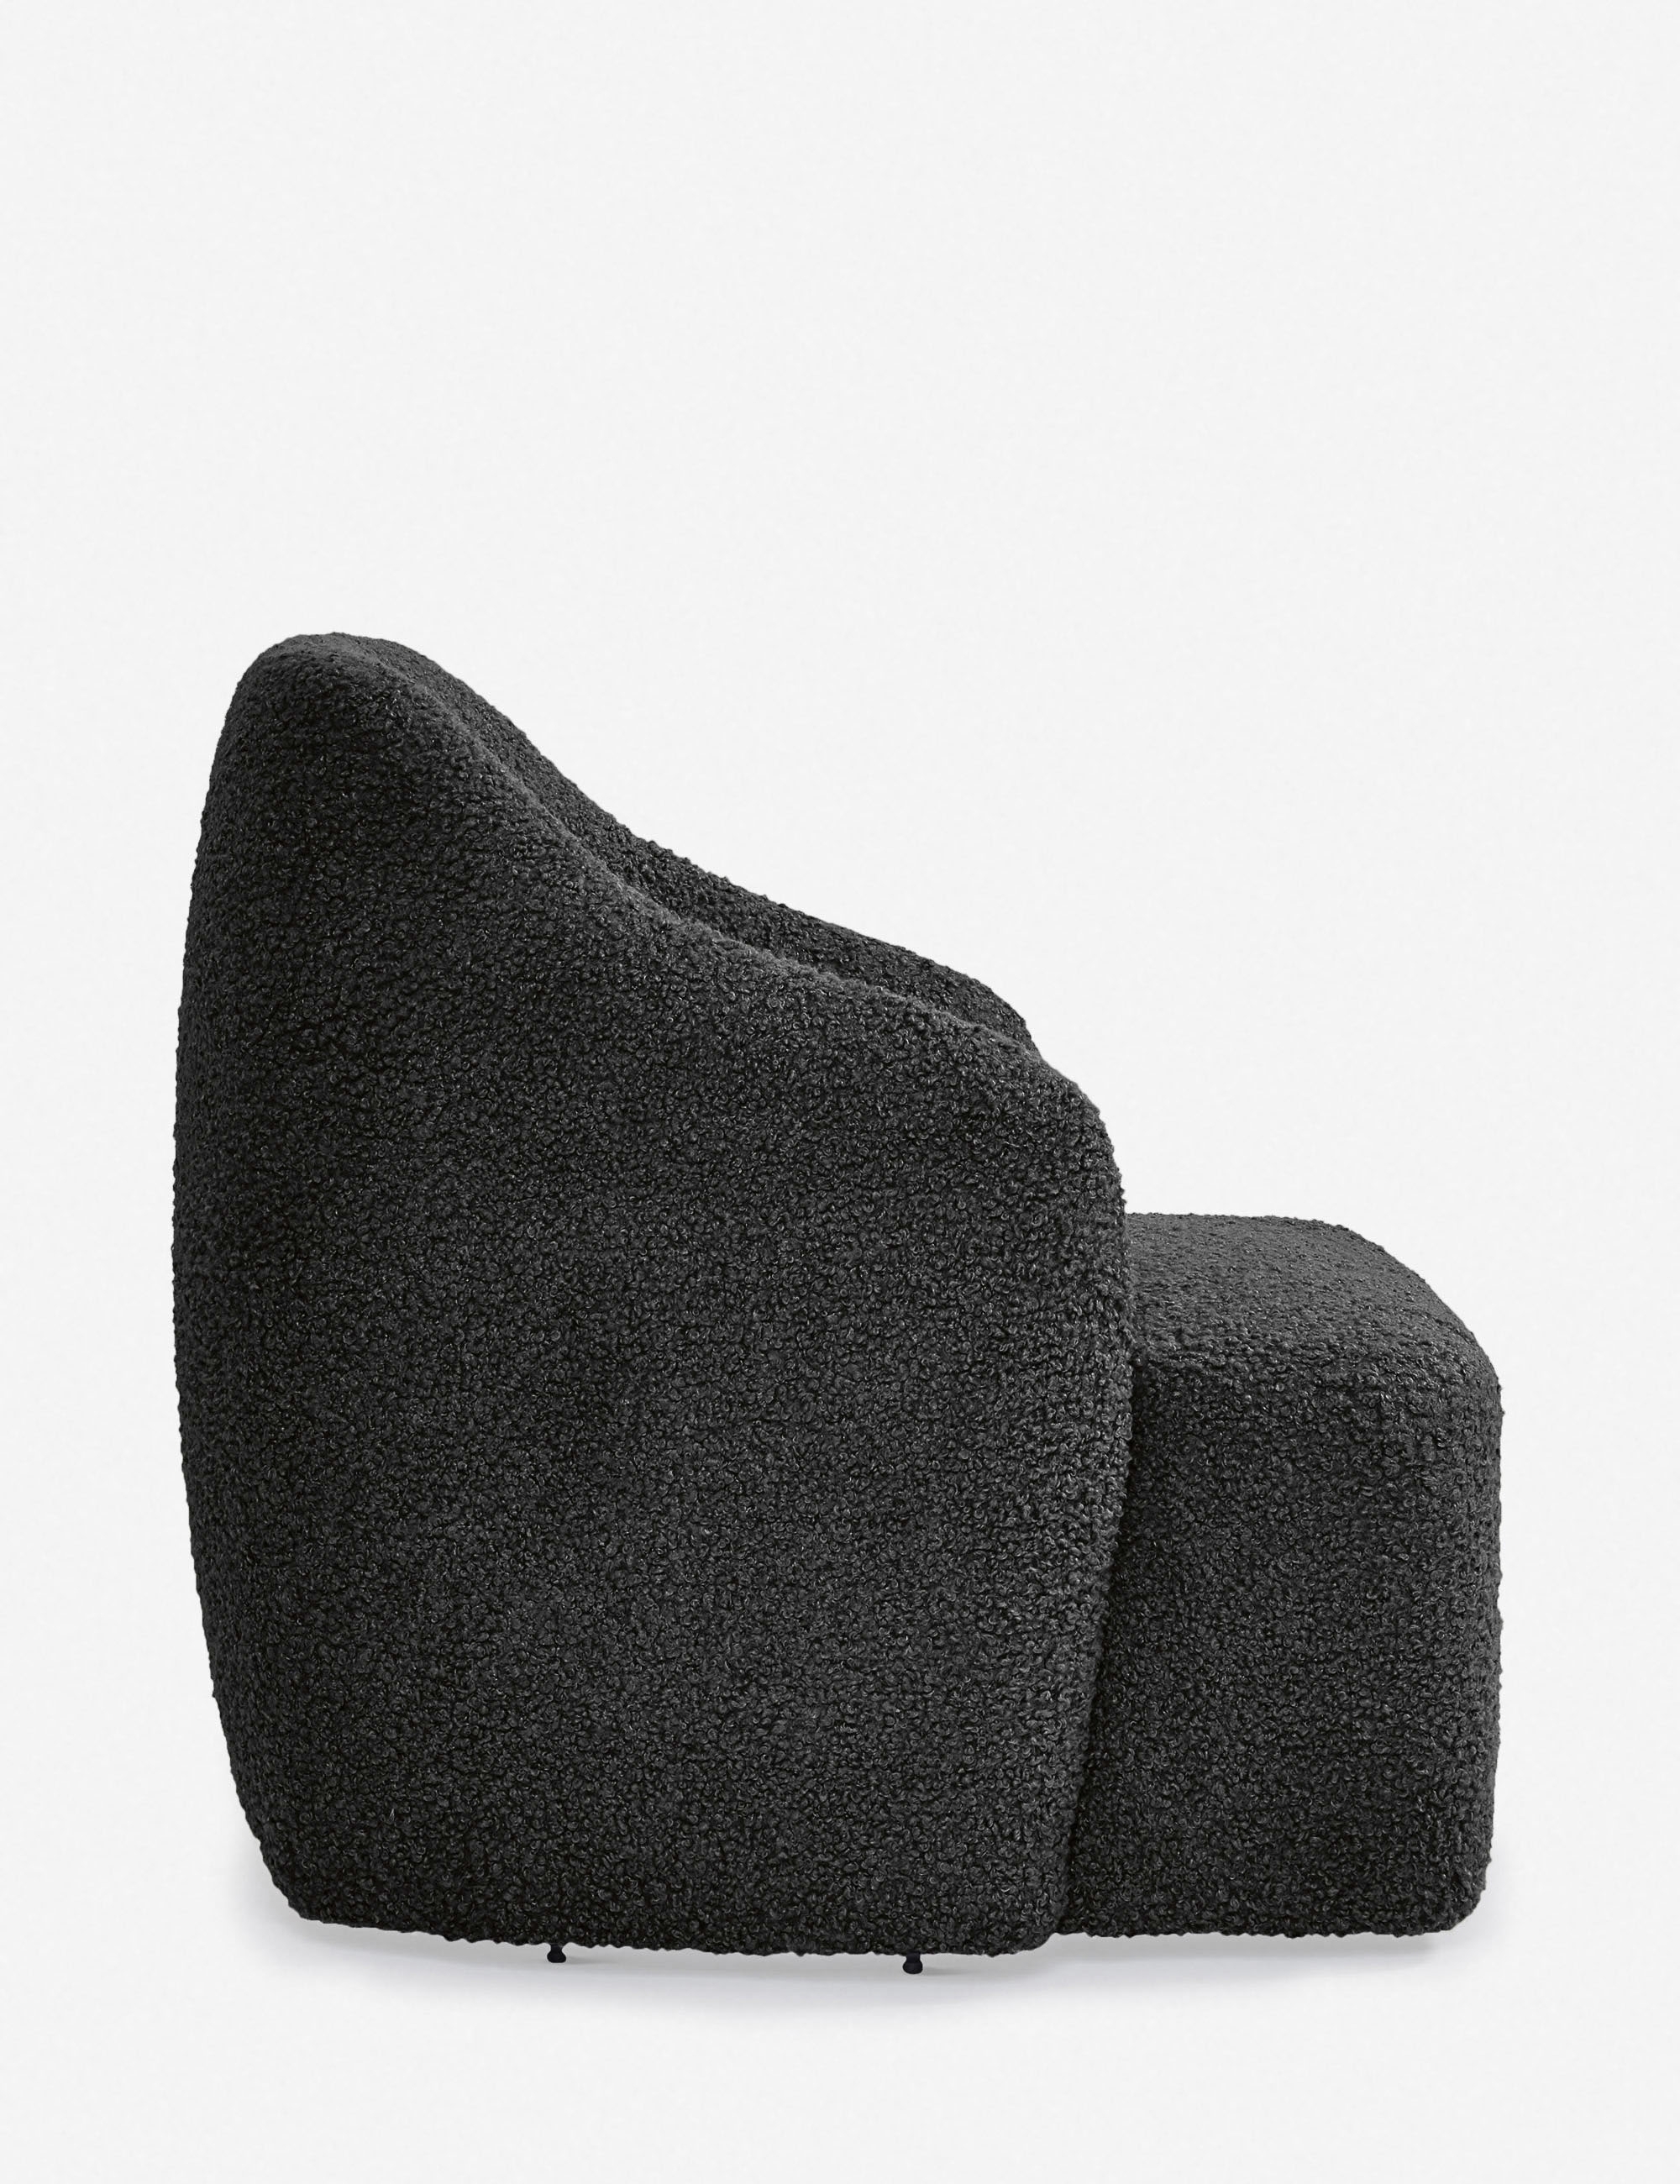 Tobi Swivel Chair - Image 2